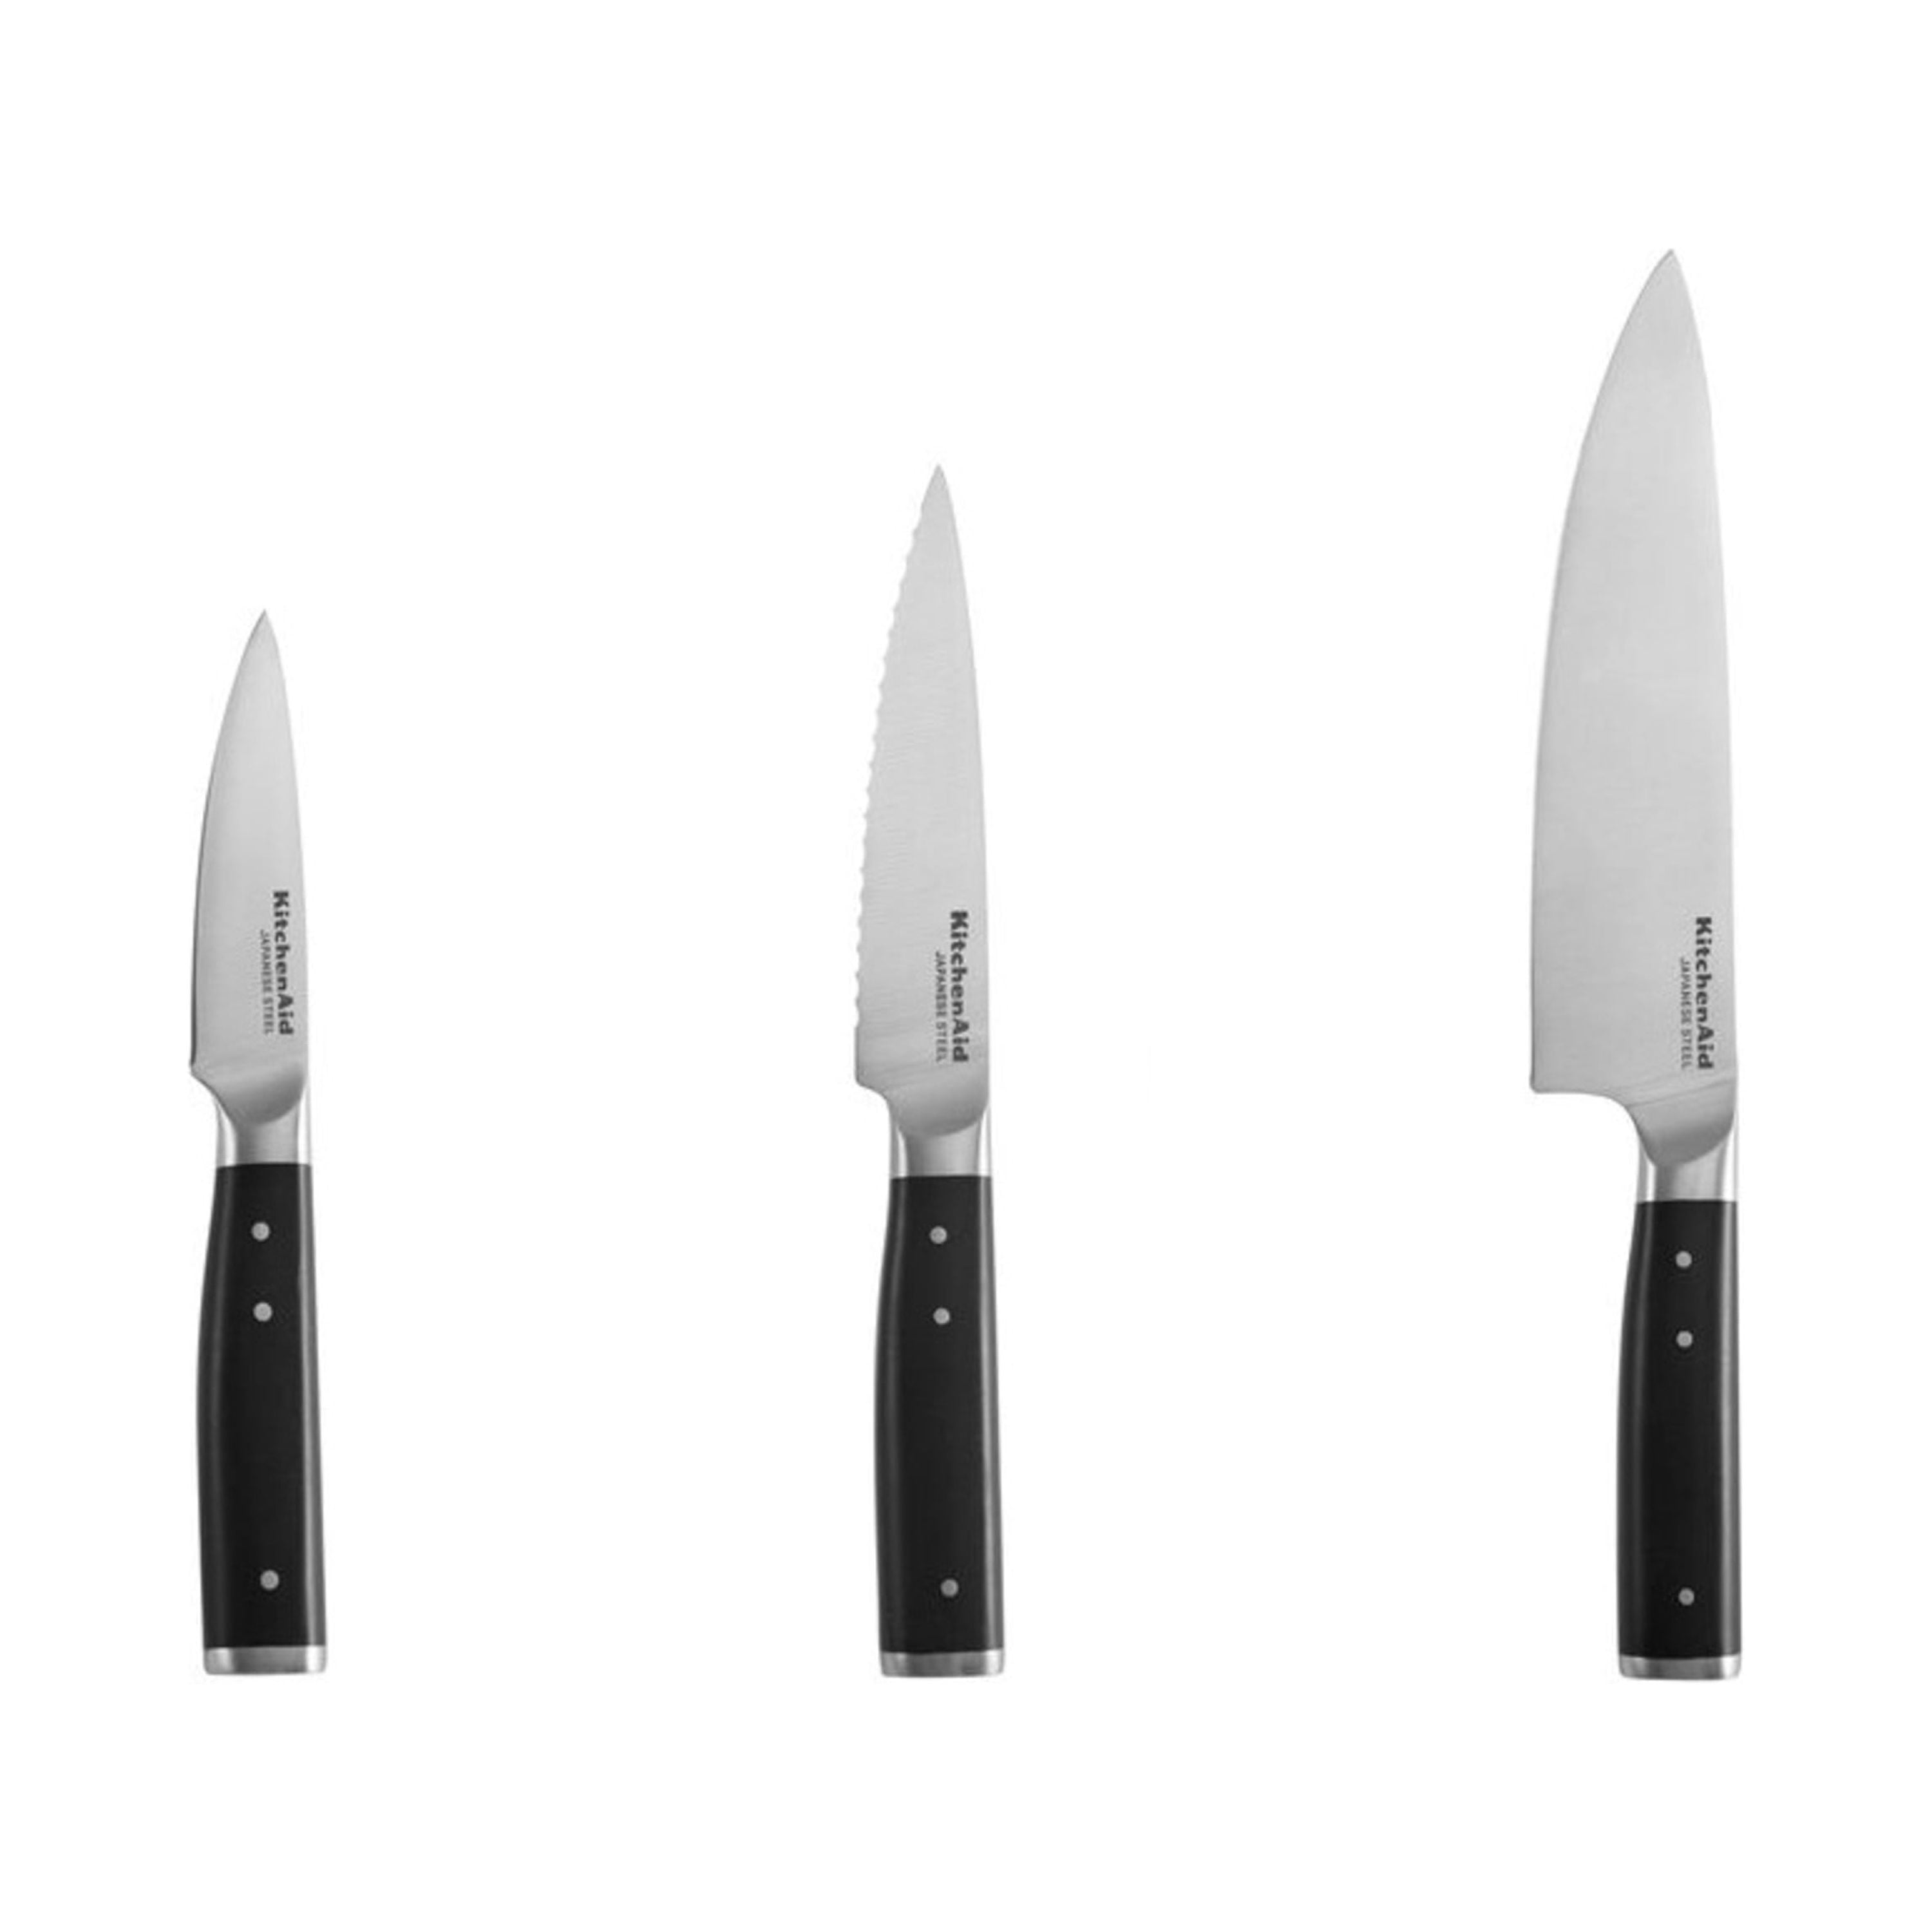 Knife set, 6 pieces, Gourmet - KitchenAid brand